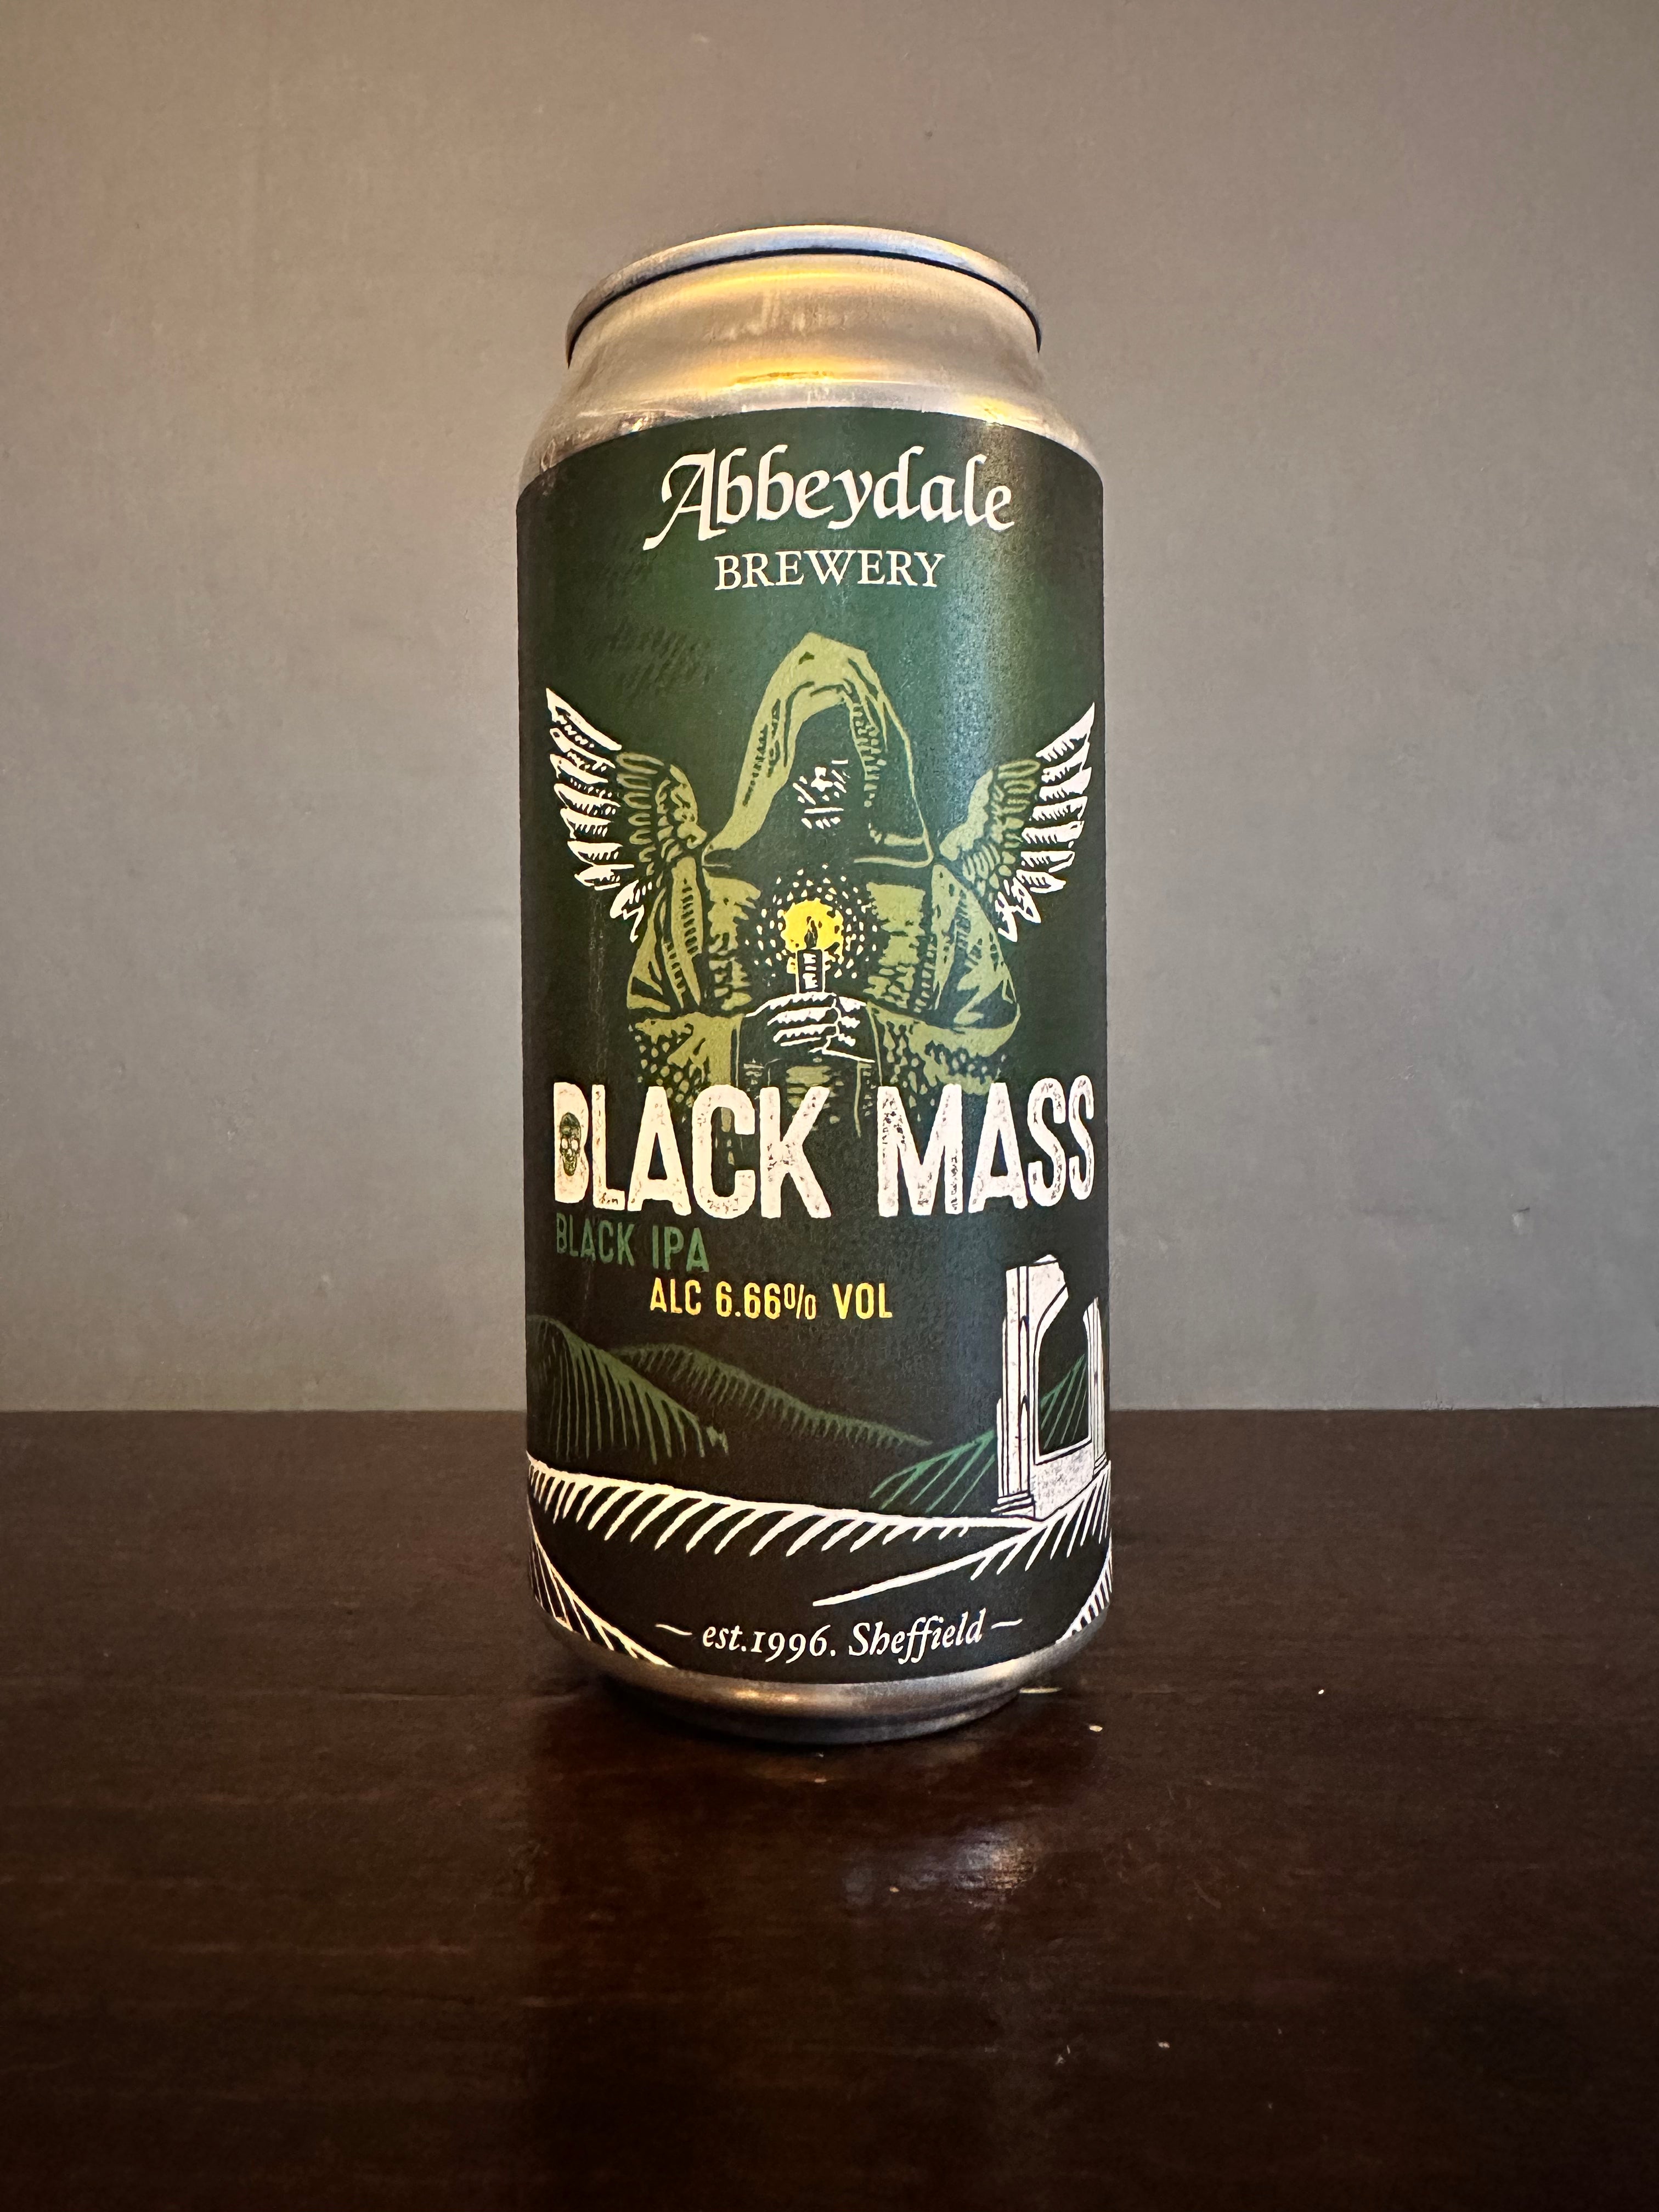 Abbeydale Black Mass Black IPA 6.66%